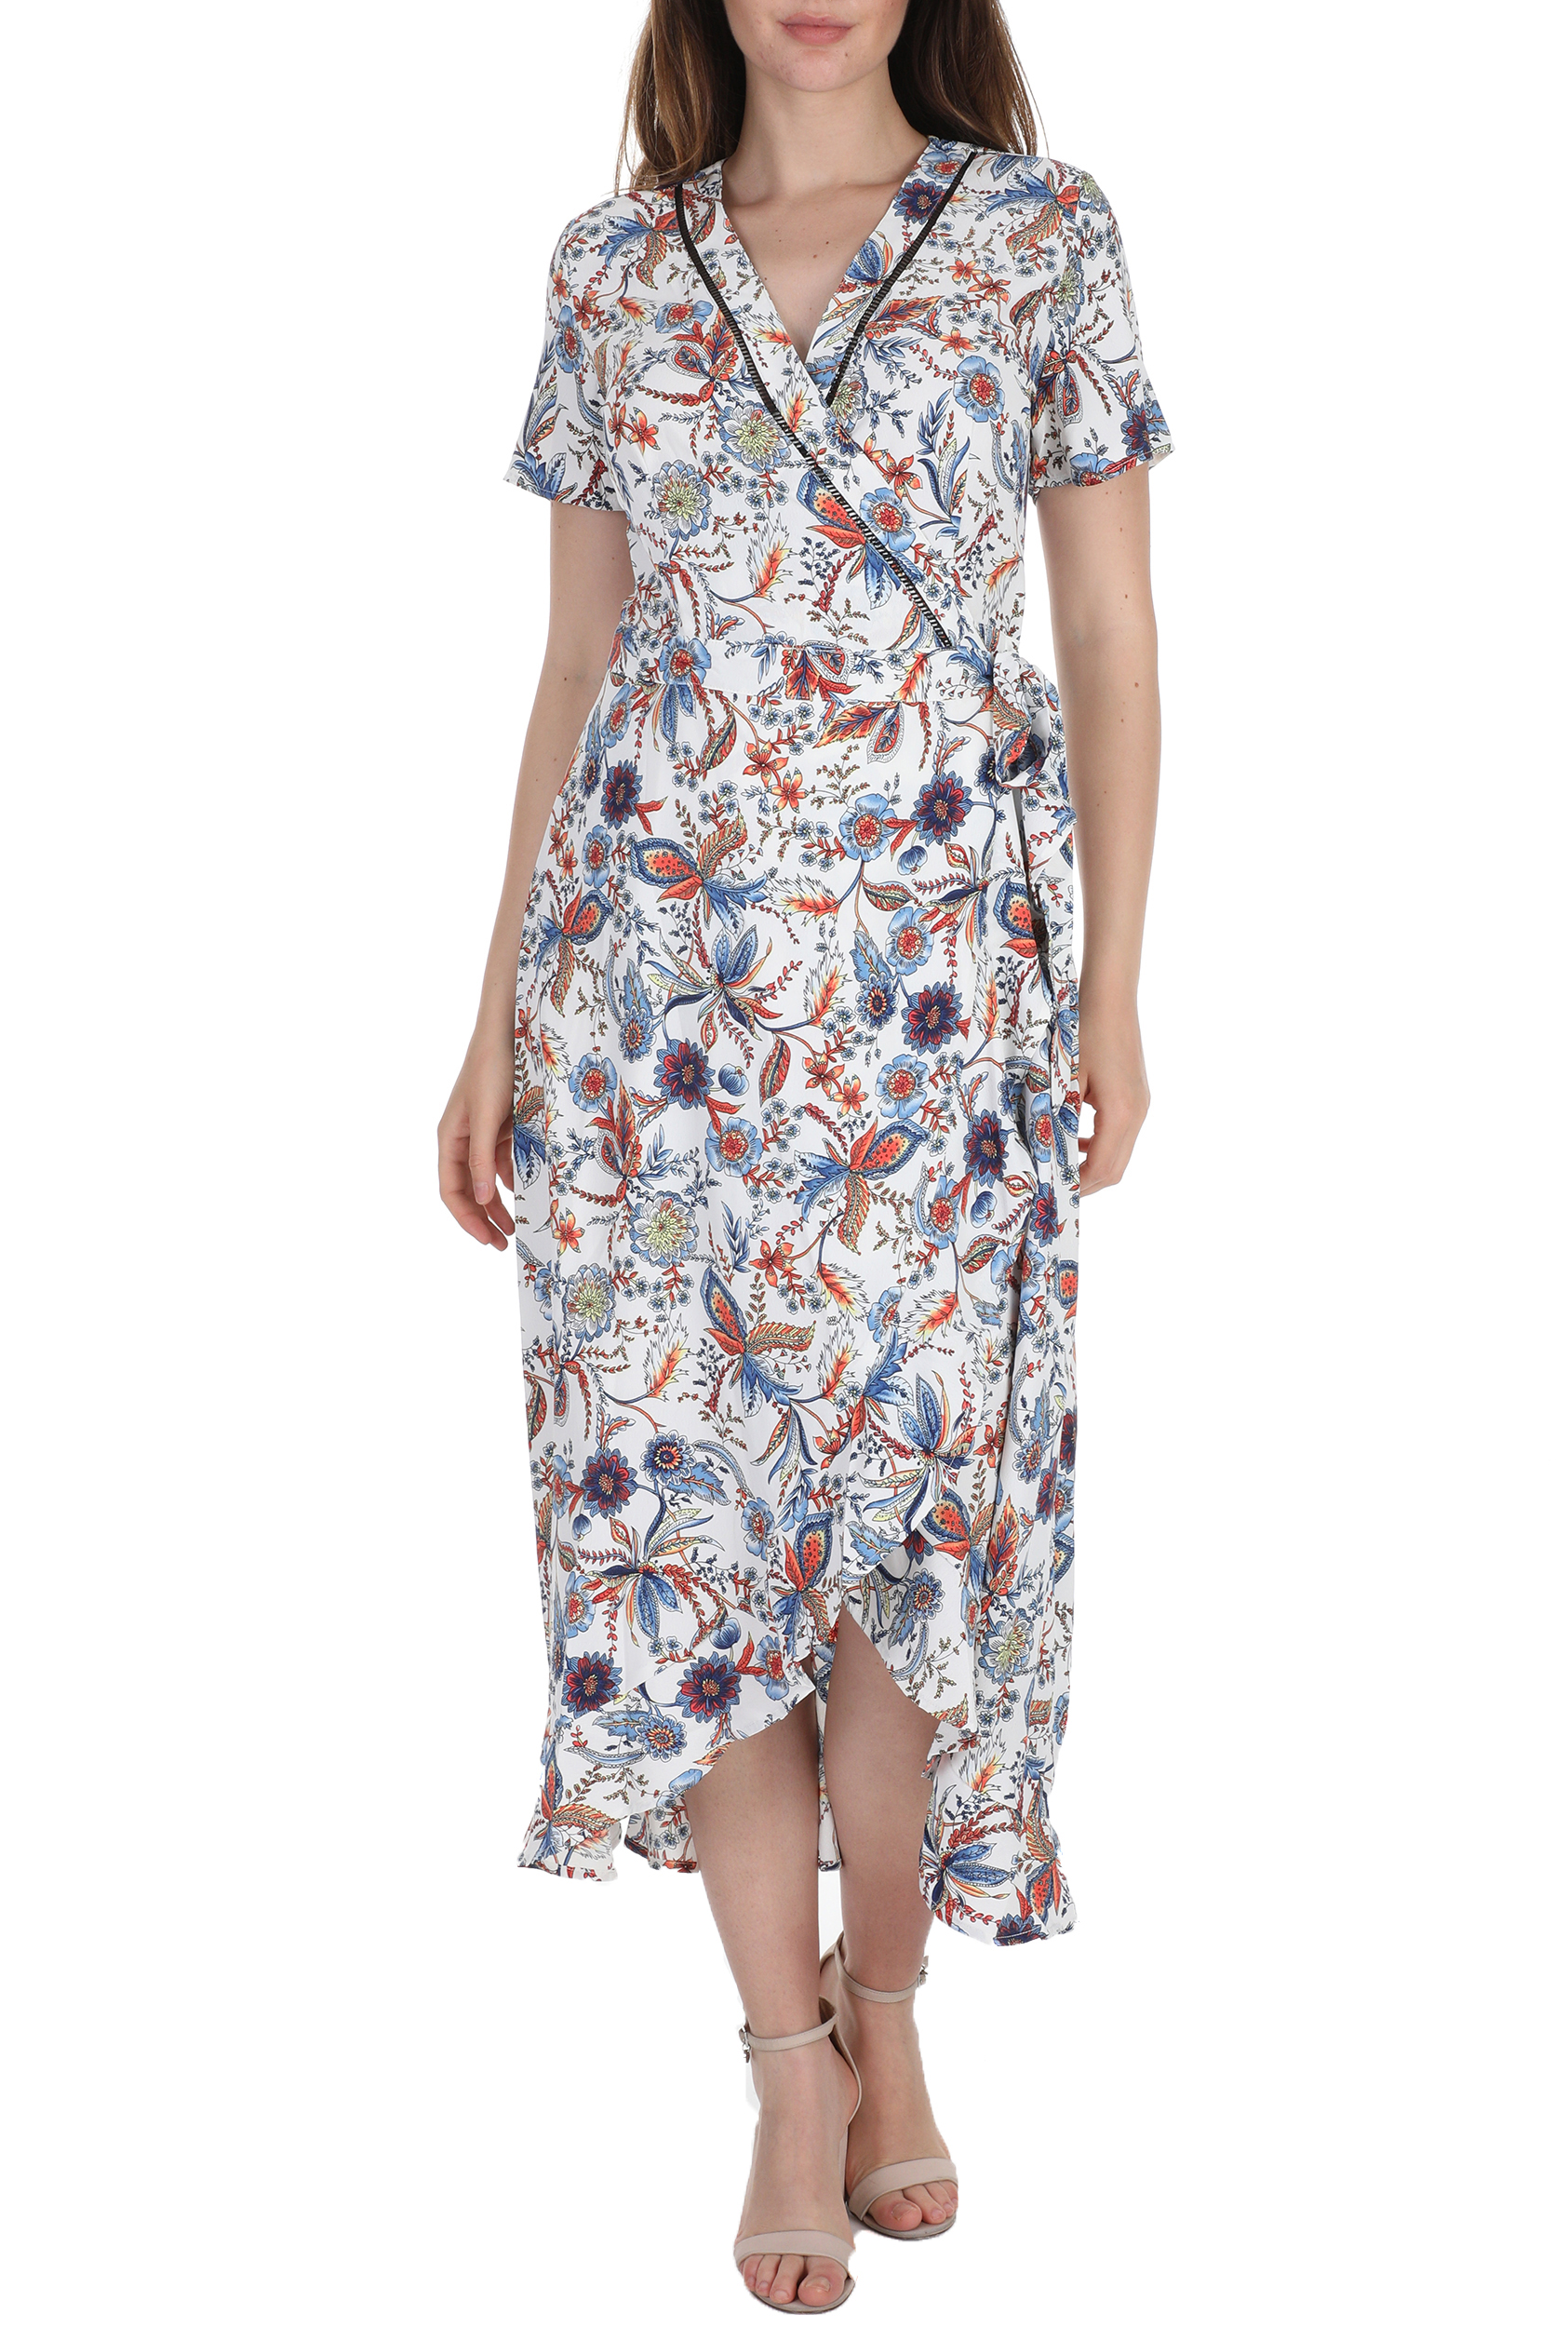 MOLLY BRACKEN – Γυναικειο maxi φορεμα MOLLY BRACKEN λευκο μπλε